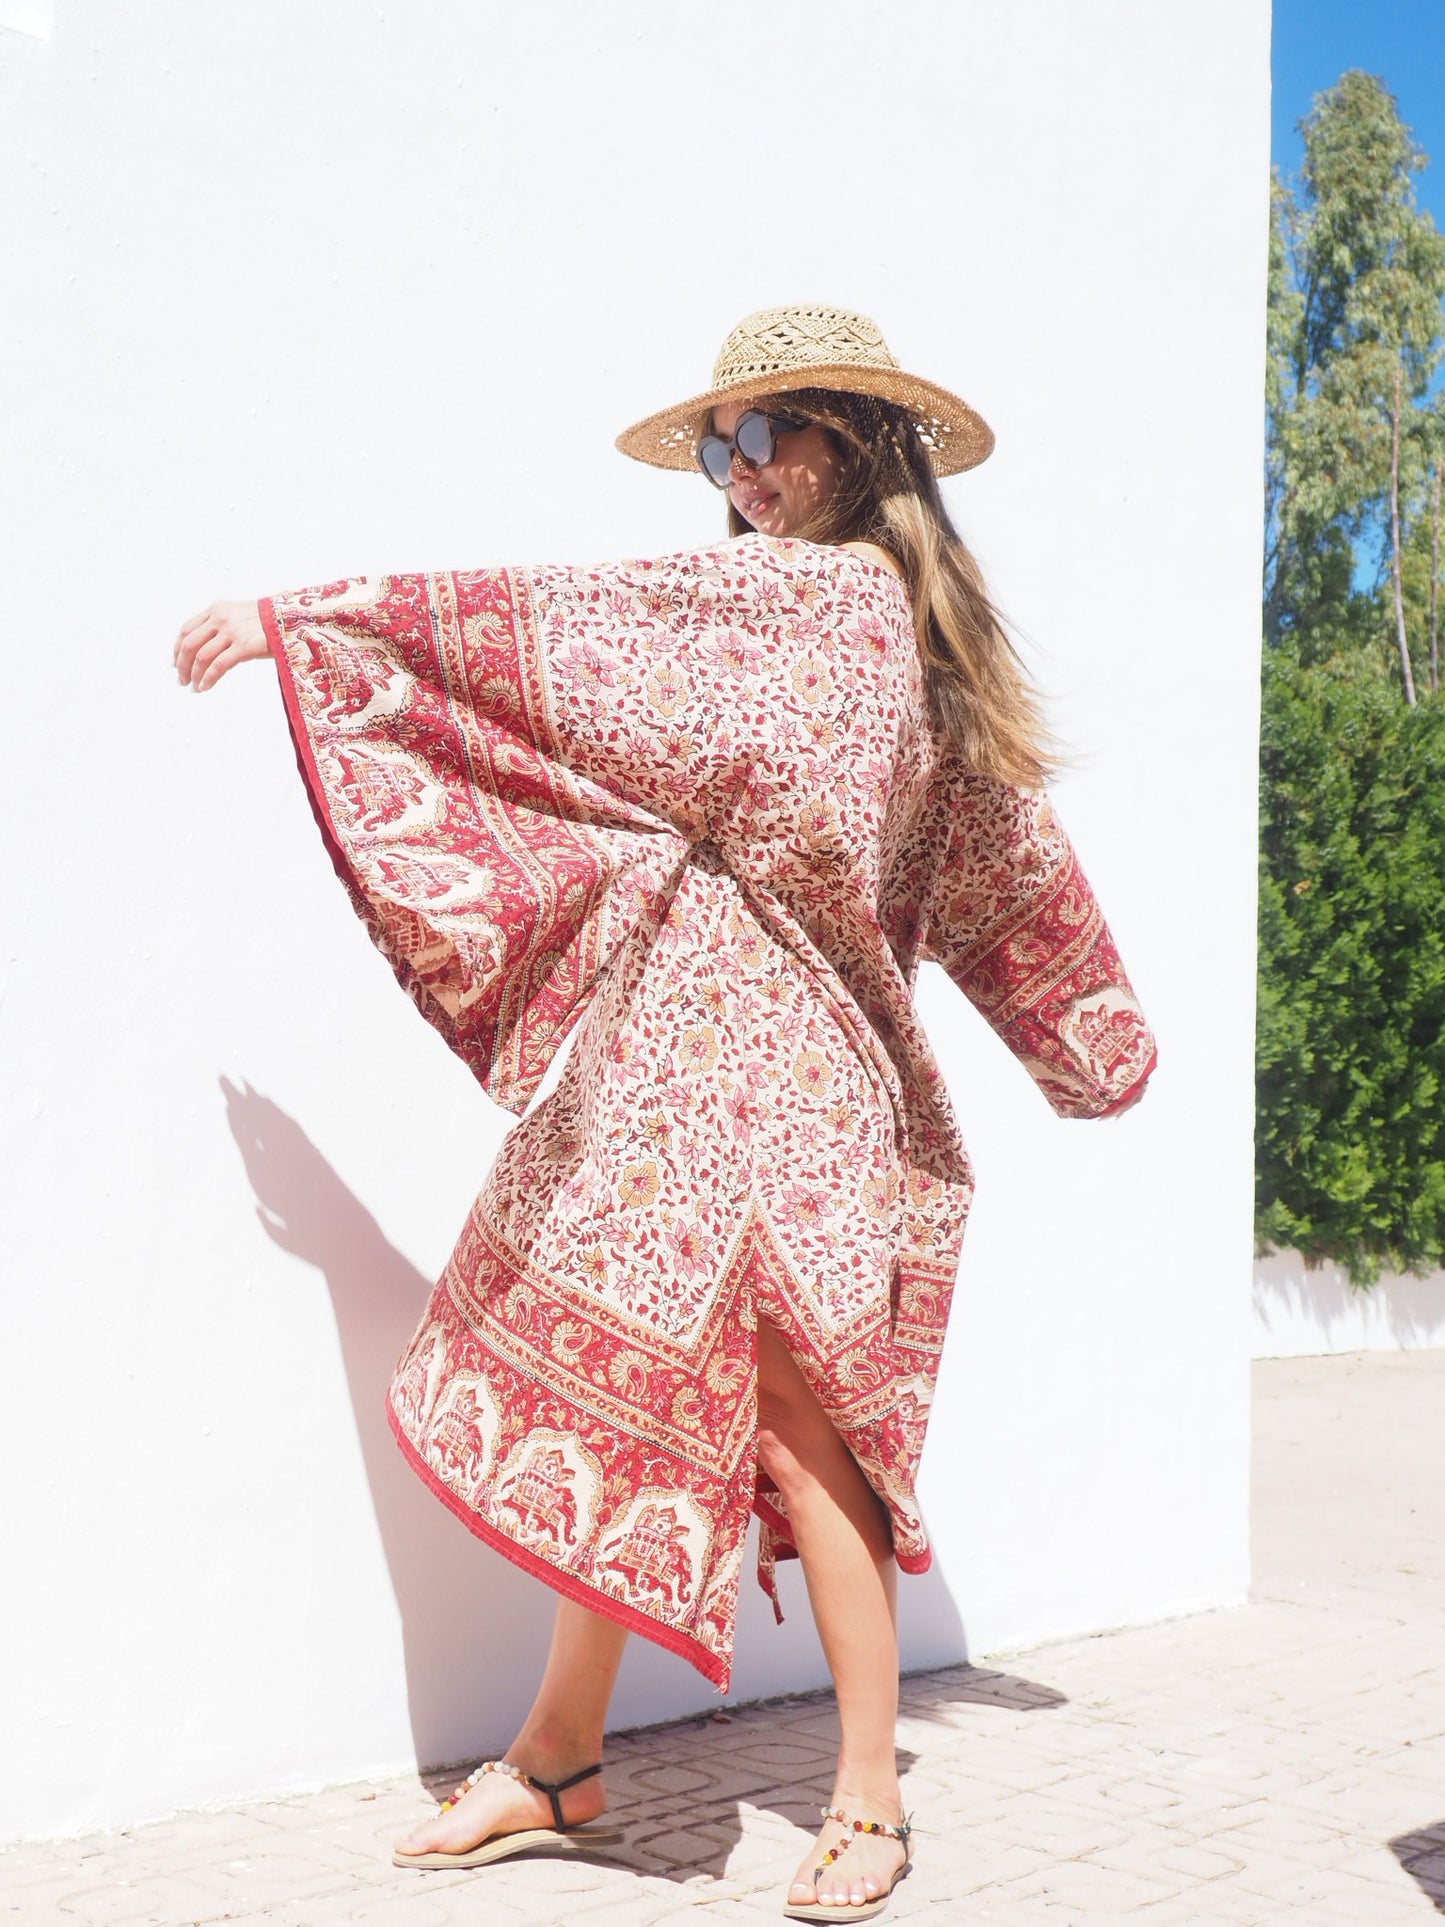 Vintage cotton block printed textiles boho dress up-cycled by Vagabond Ibiza